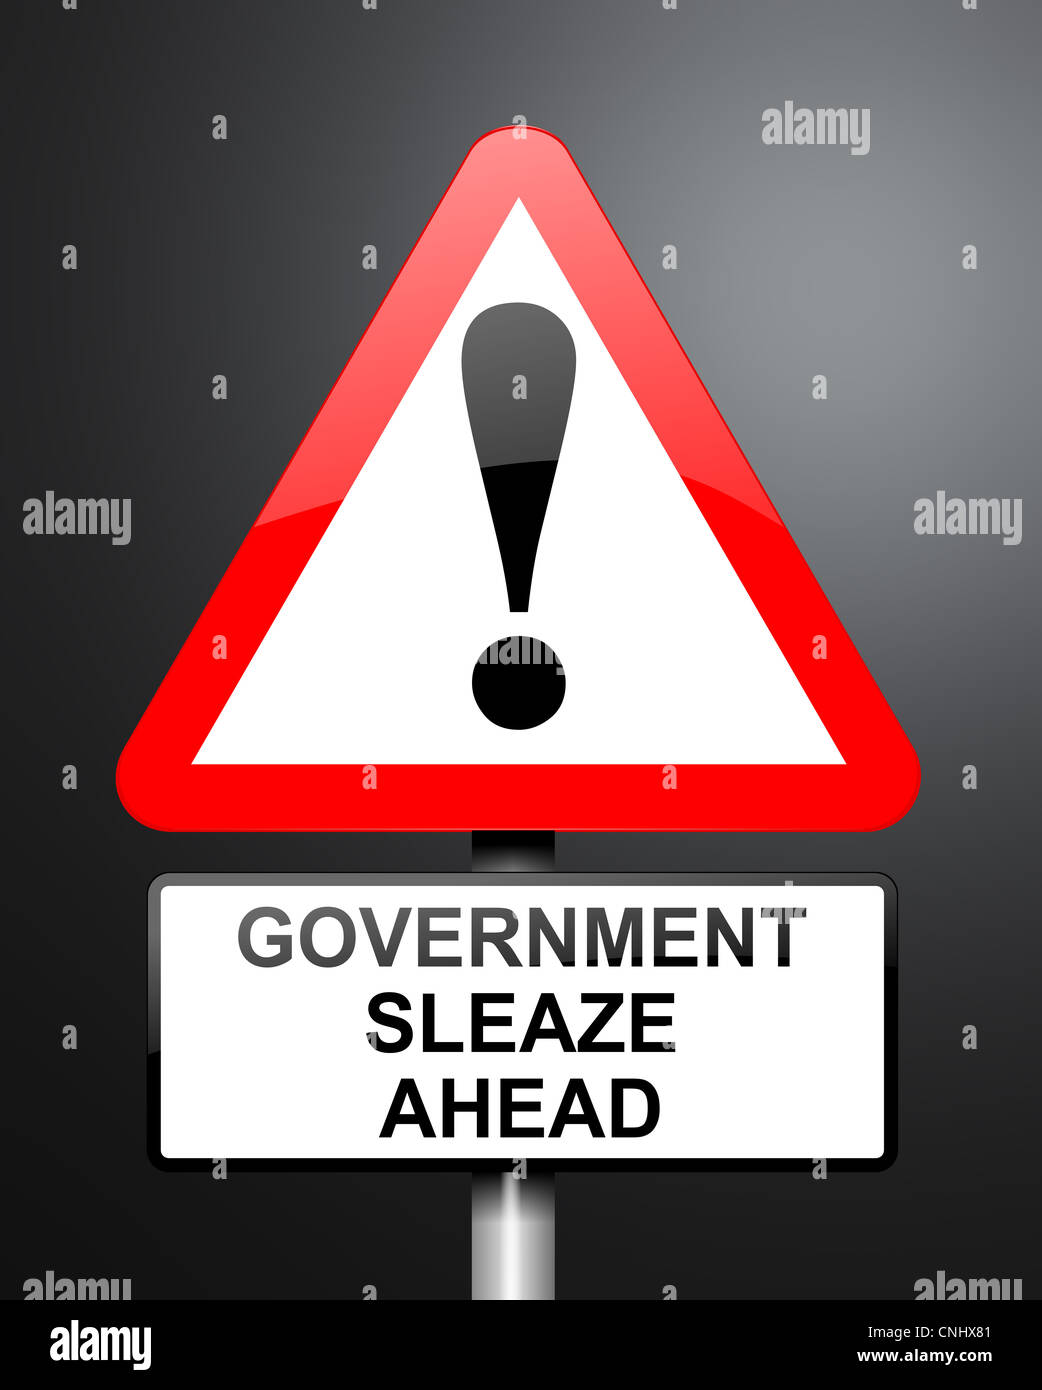 Government sleaze. Stock Photo